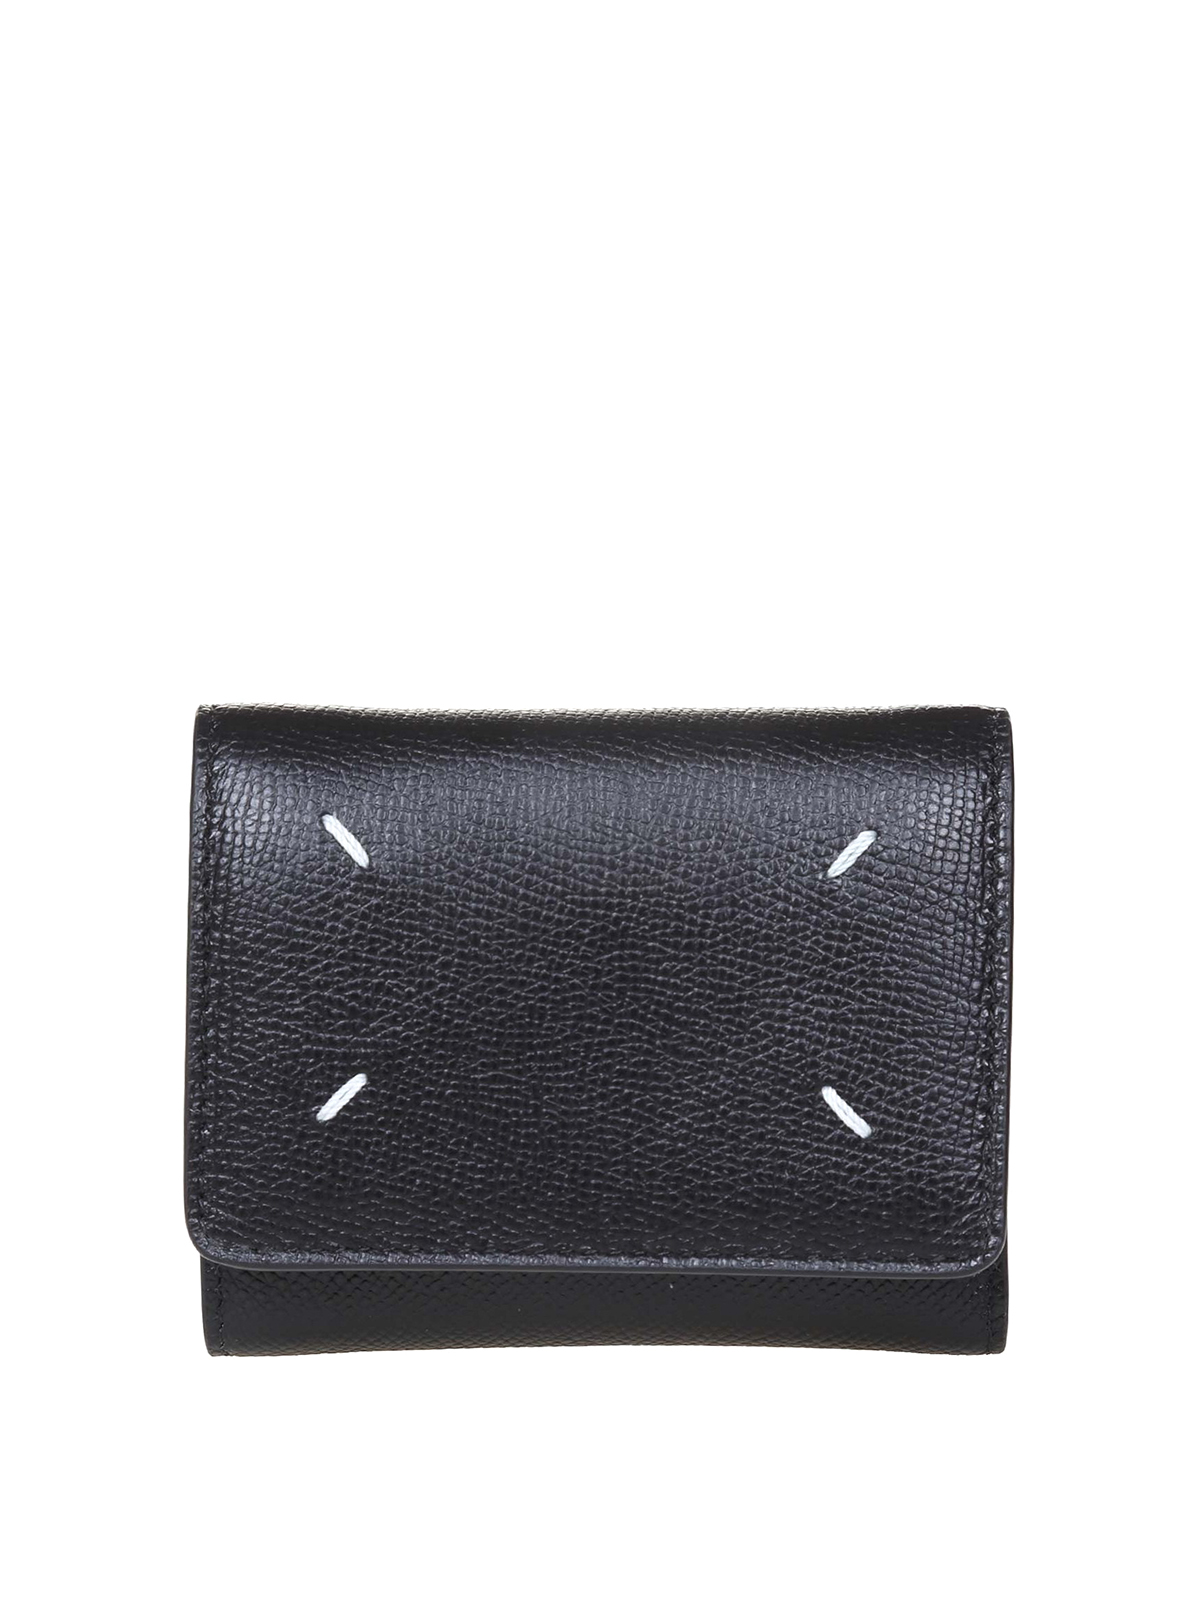 Maison Margiela Black Leather Wallet